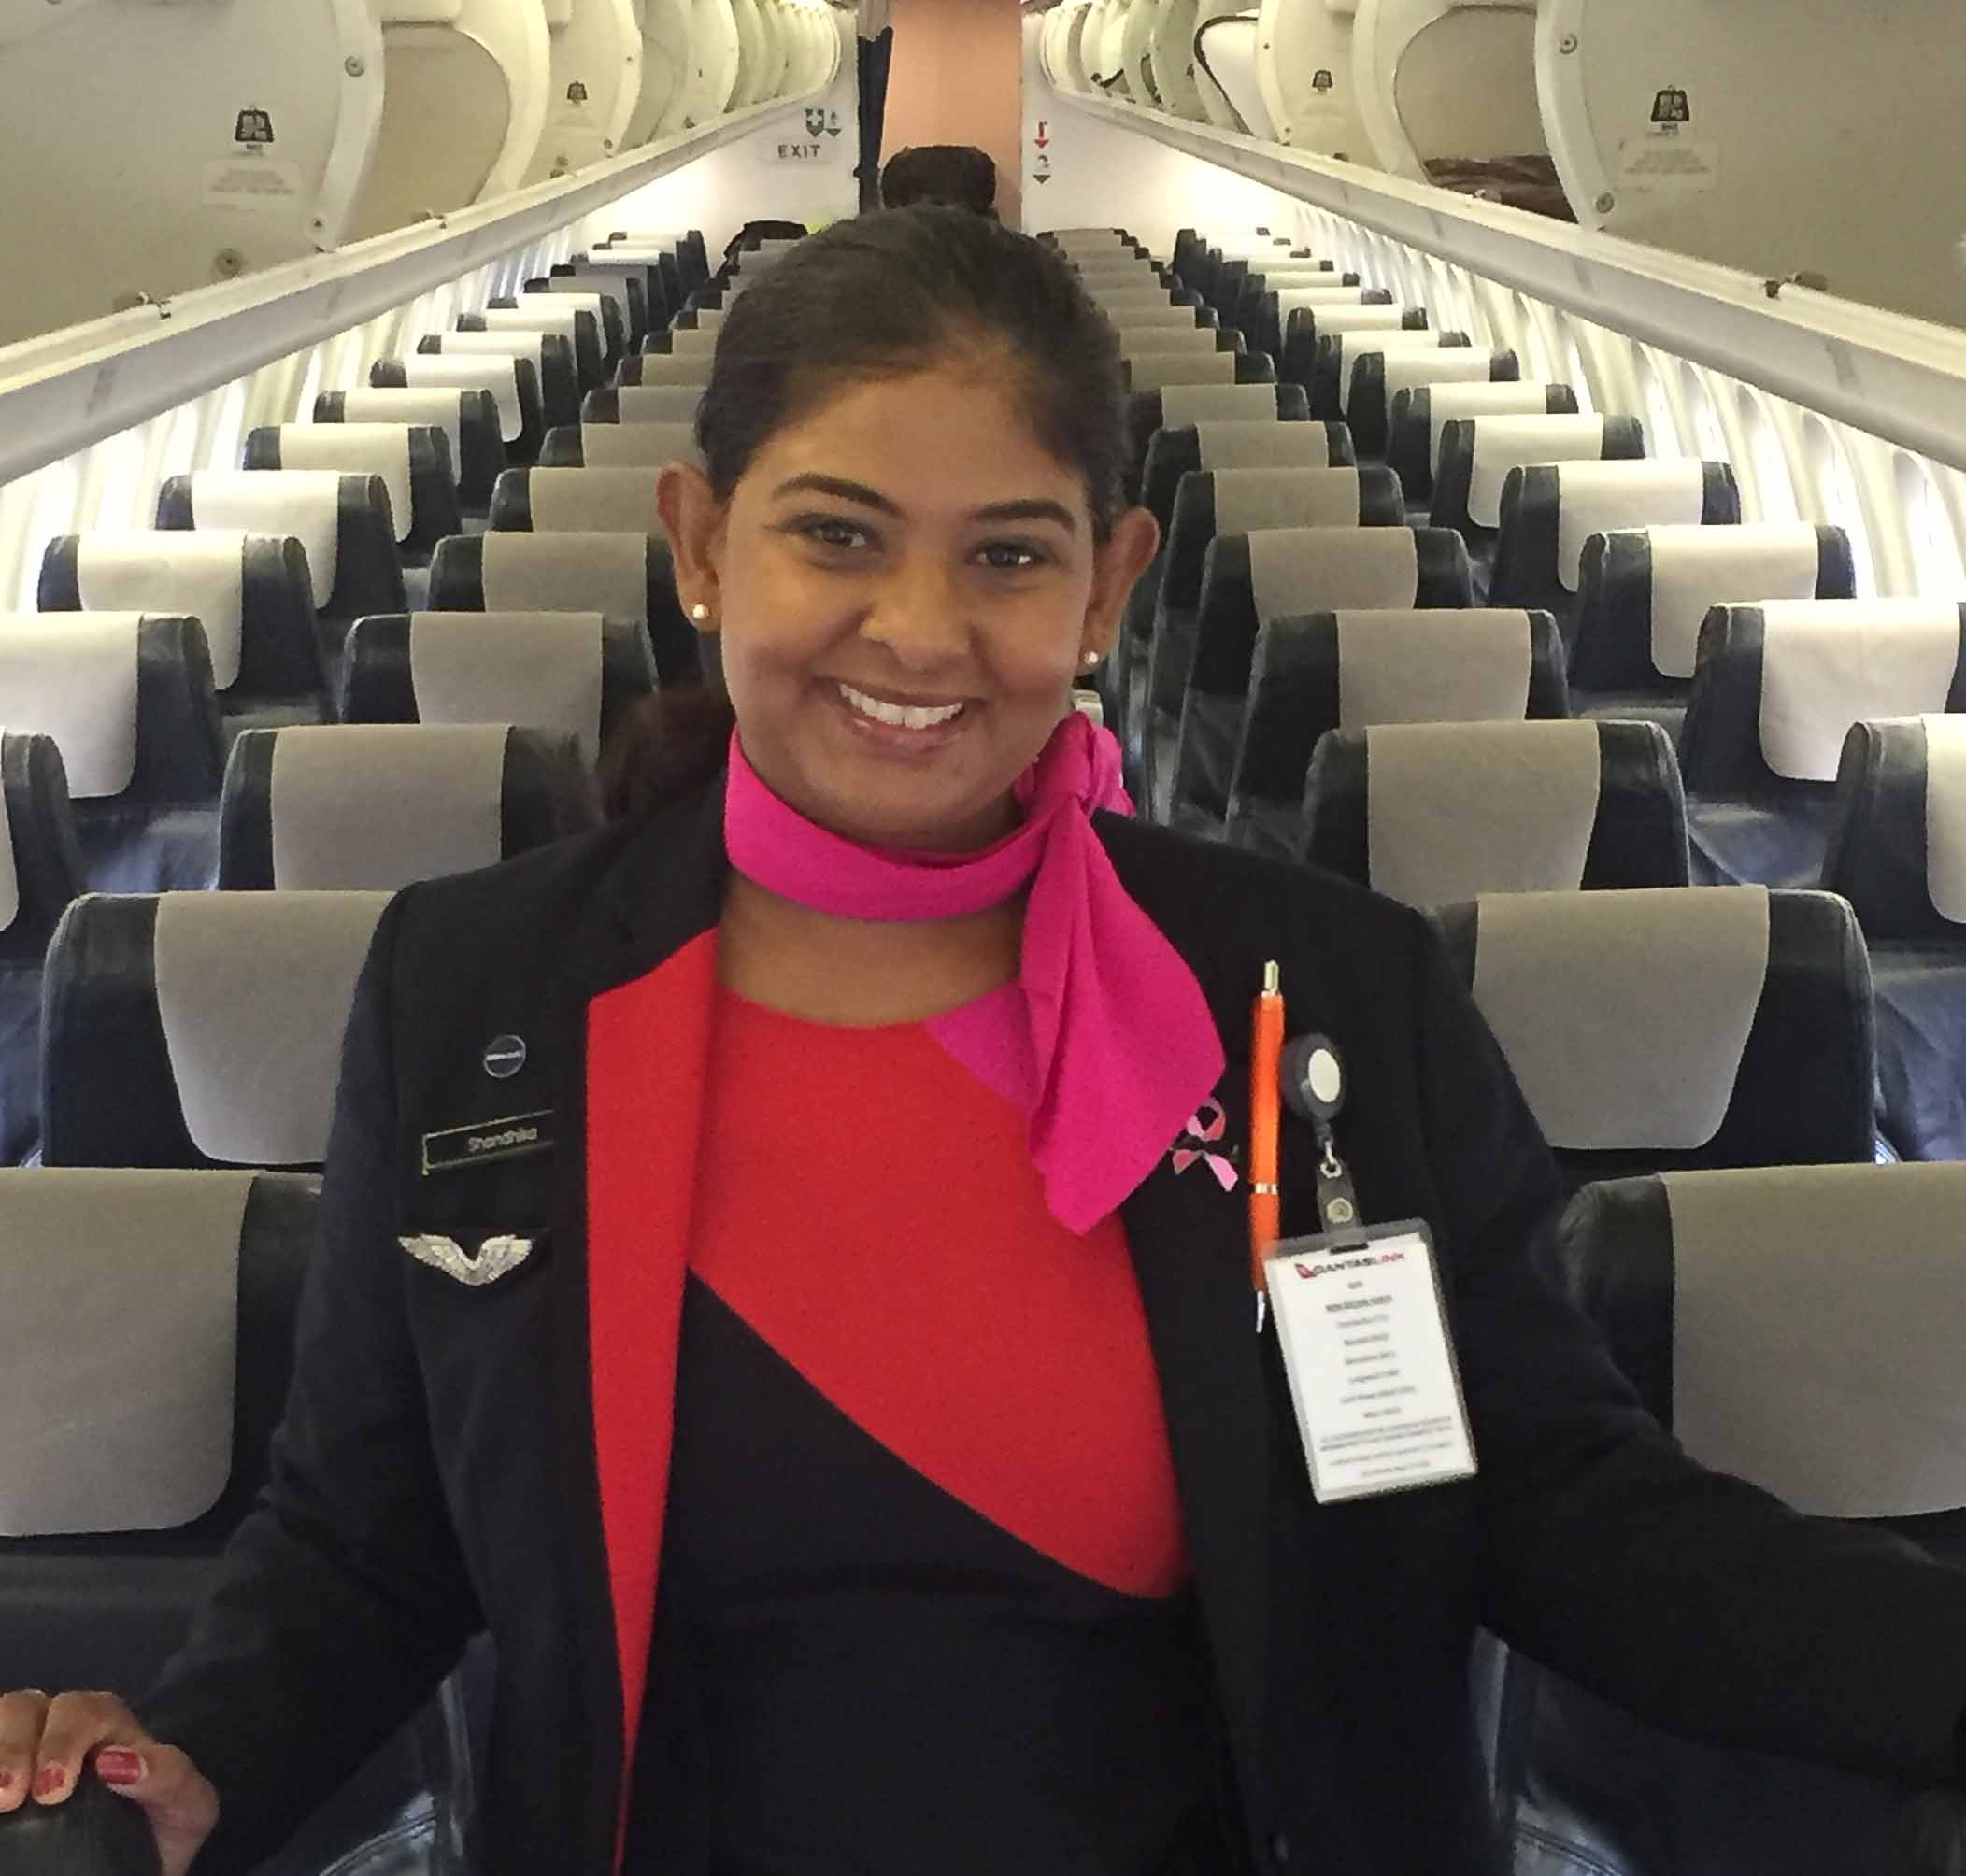 qantas staff travel standby